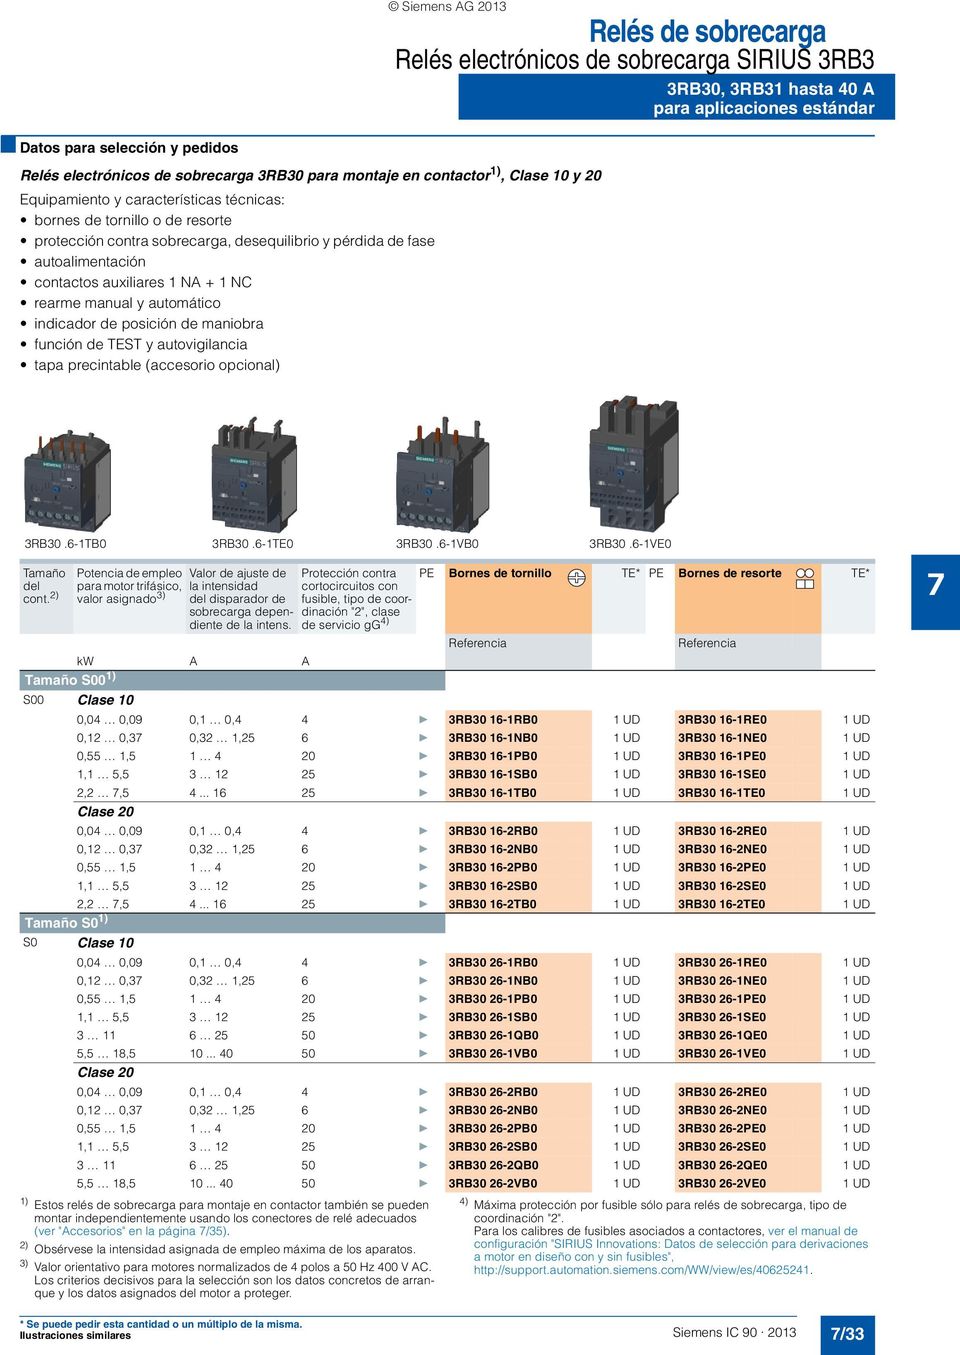 precintable (accesorio opcional) Relés electrónicos de sobrecarga SIRIUS 3RB3 3RB30, 3RB31 hasta 40 A 3RB30.6-1TB0 3RB30.6-1TE0 3RB30.6-1VB0 3RB30.6-1VE0 Tamaño del cont.